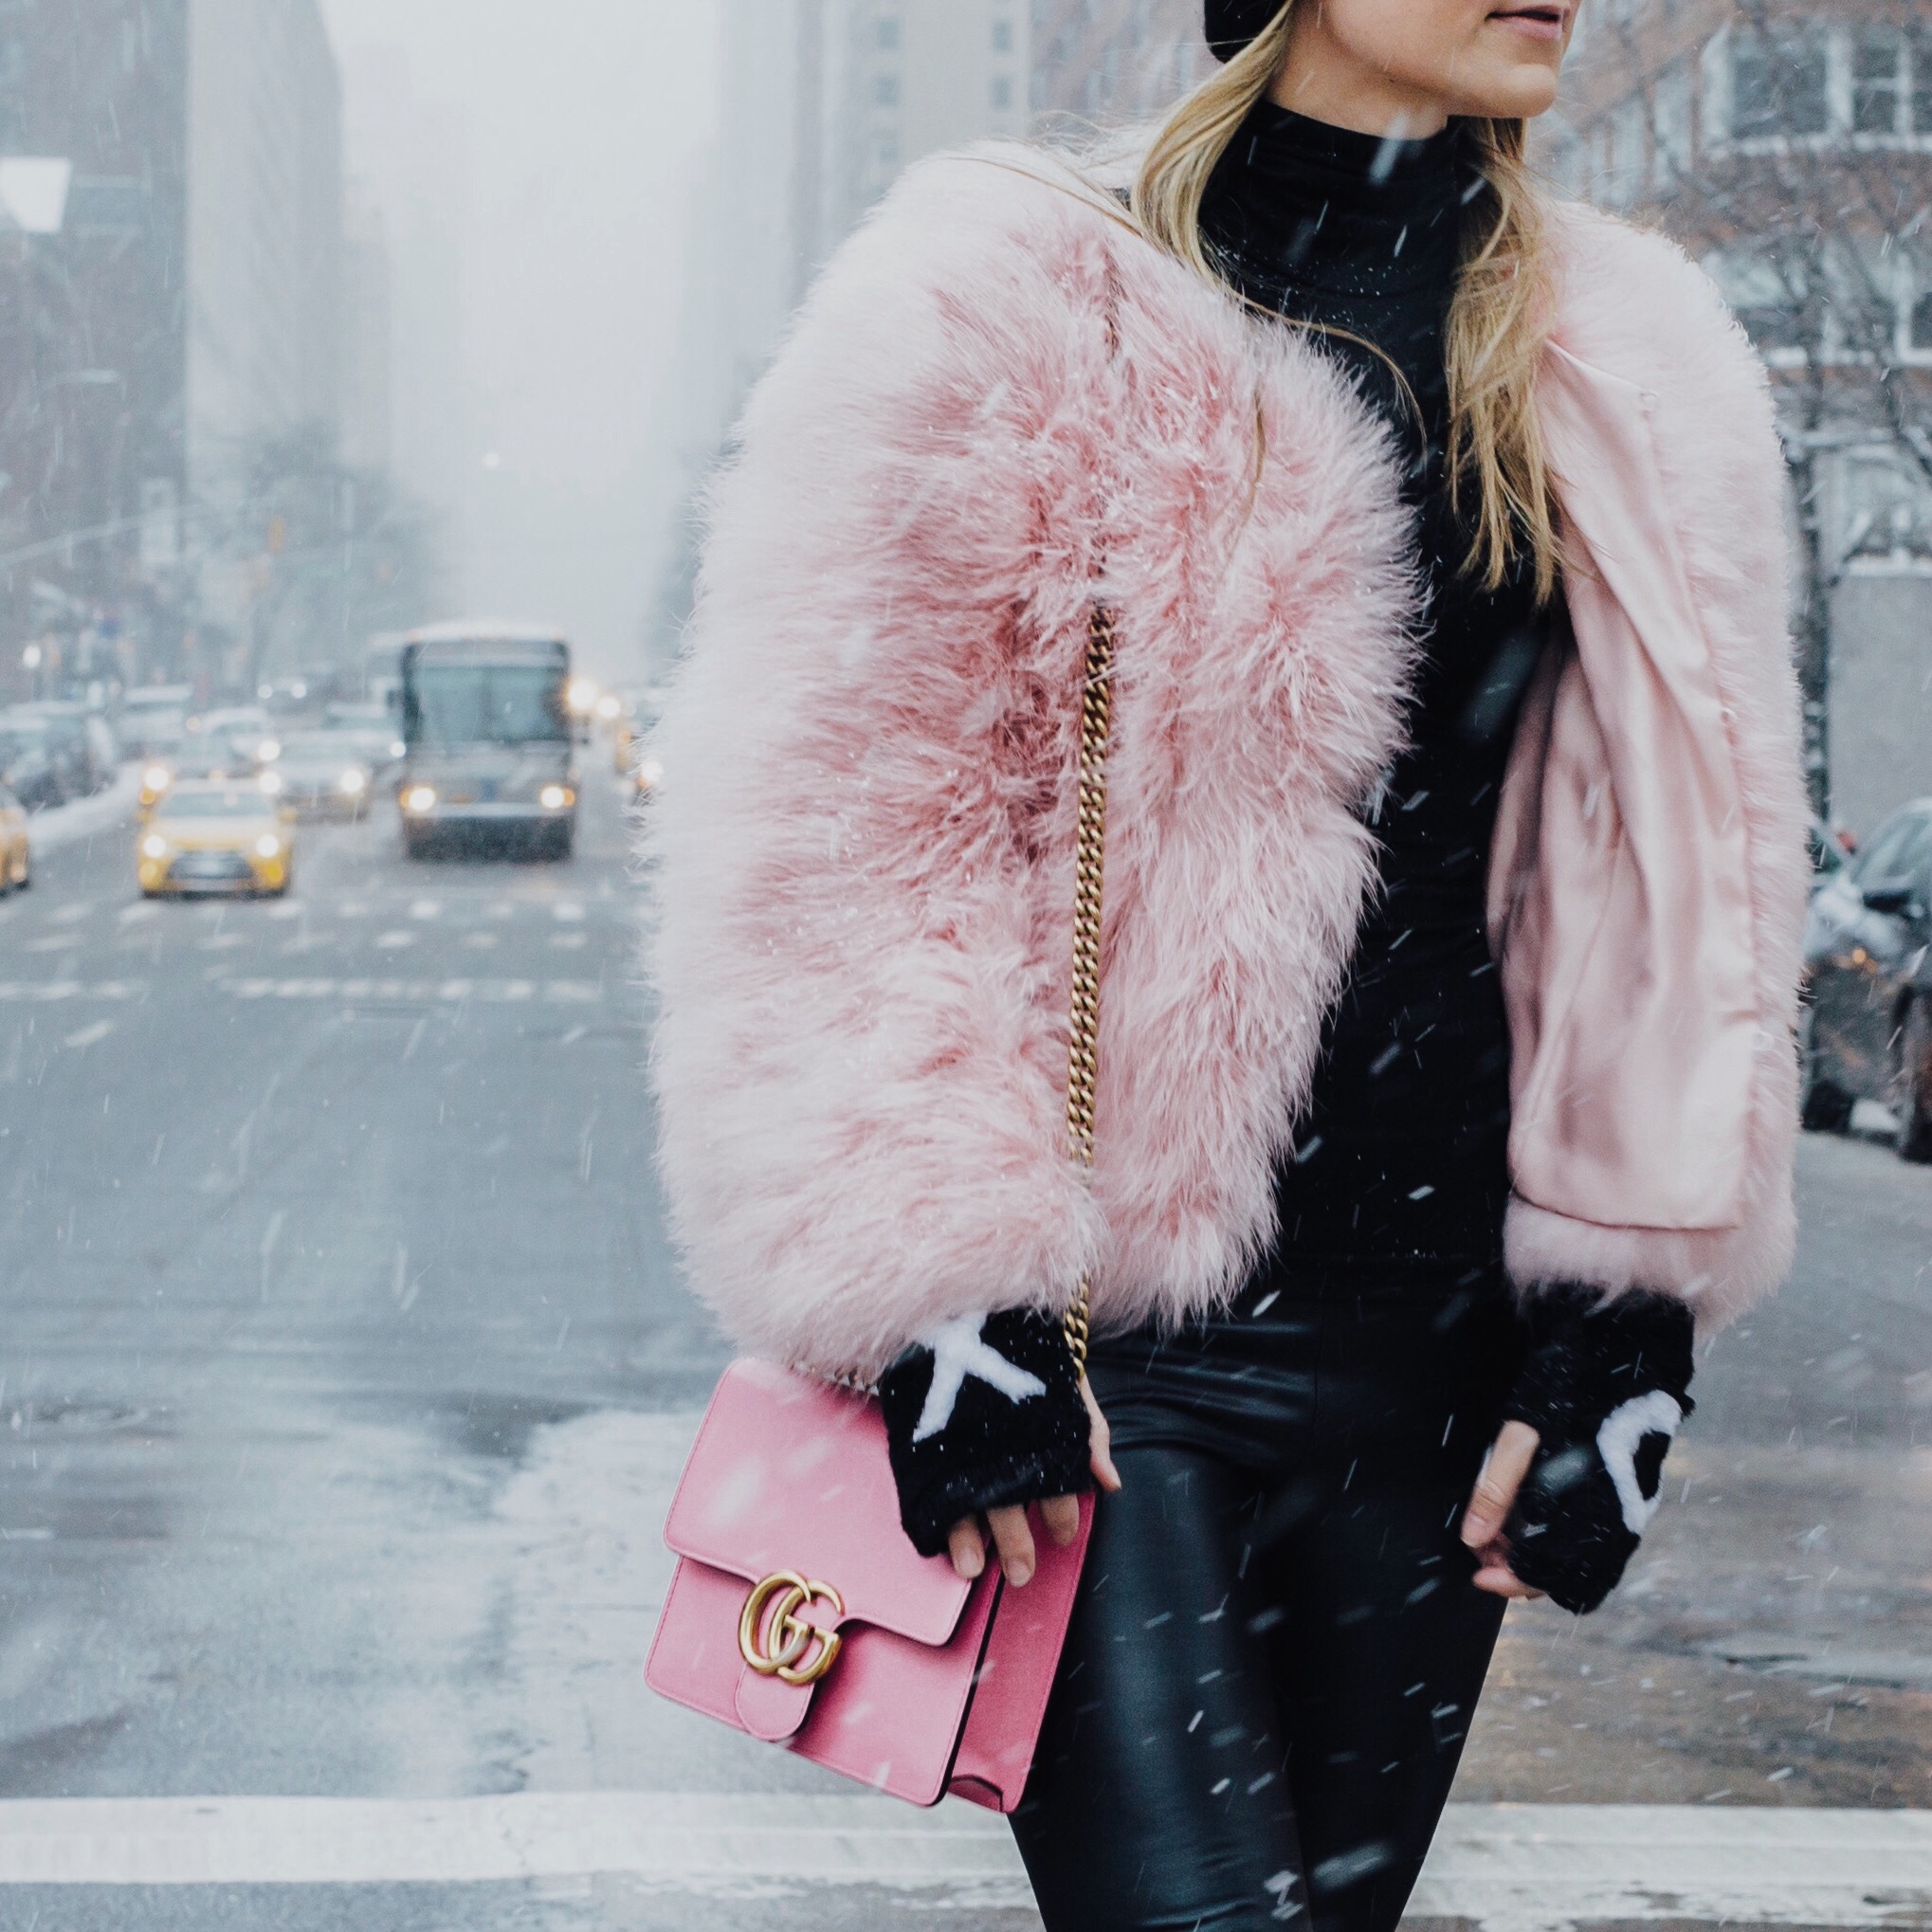 Hot Bag Review: Gucci Marmont Bag — christie ferrari